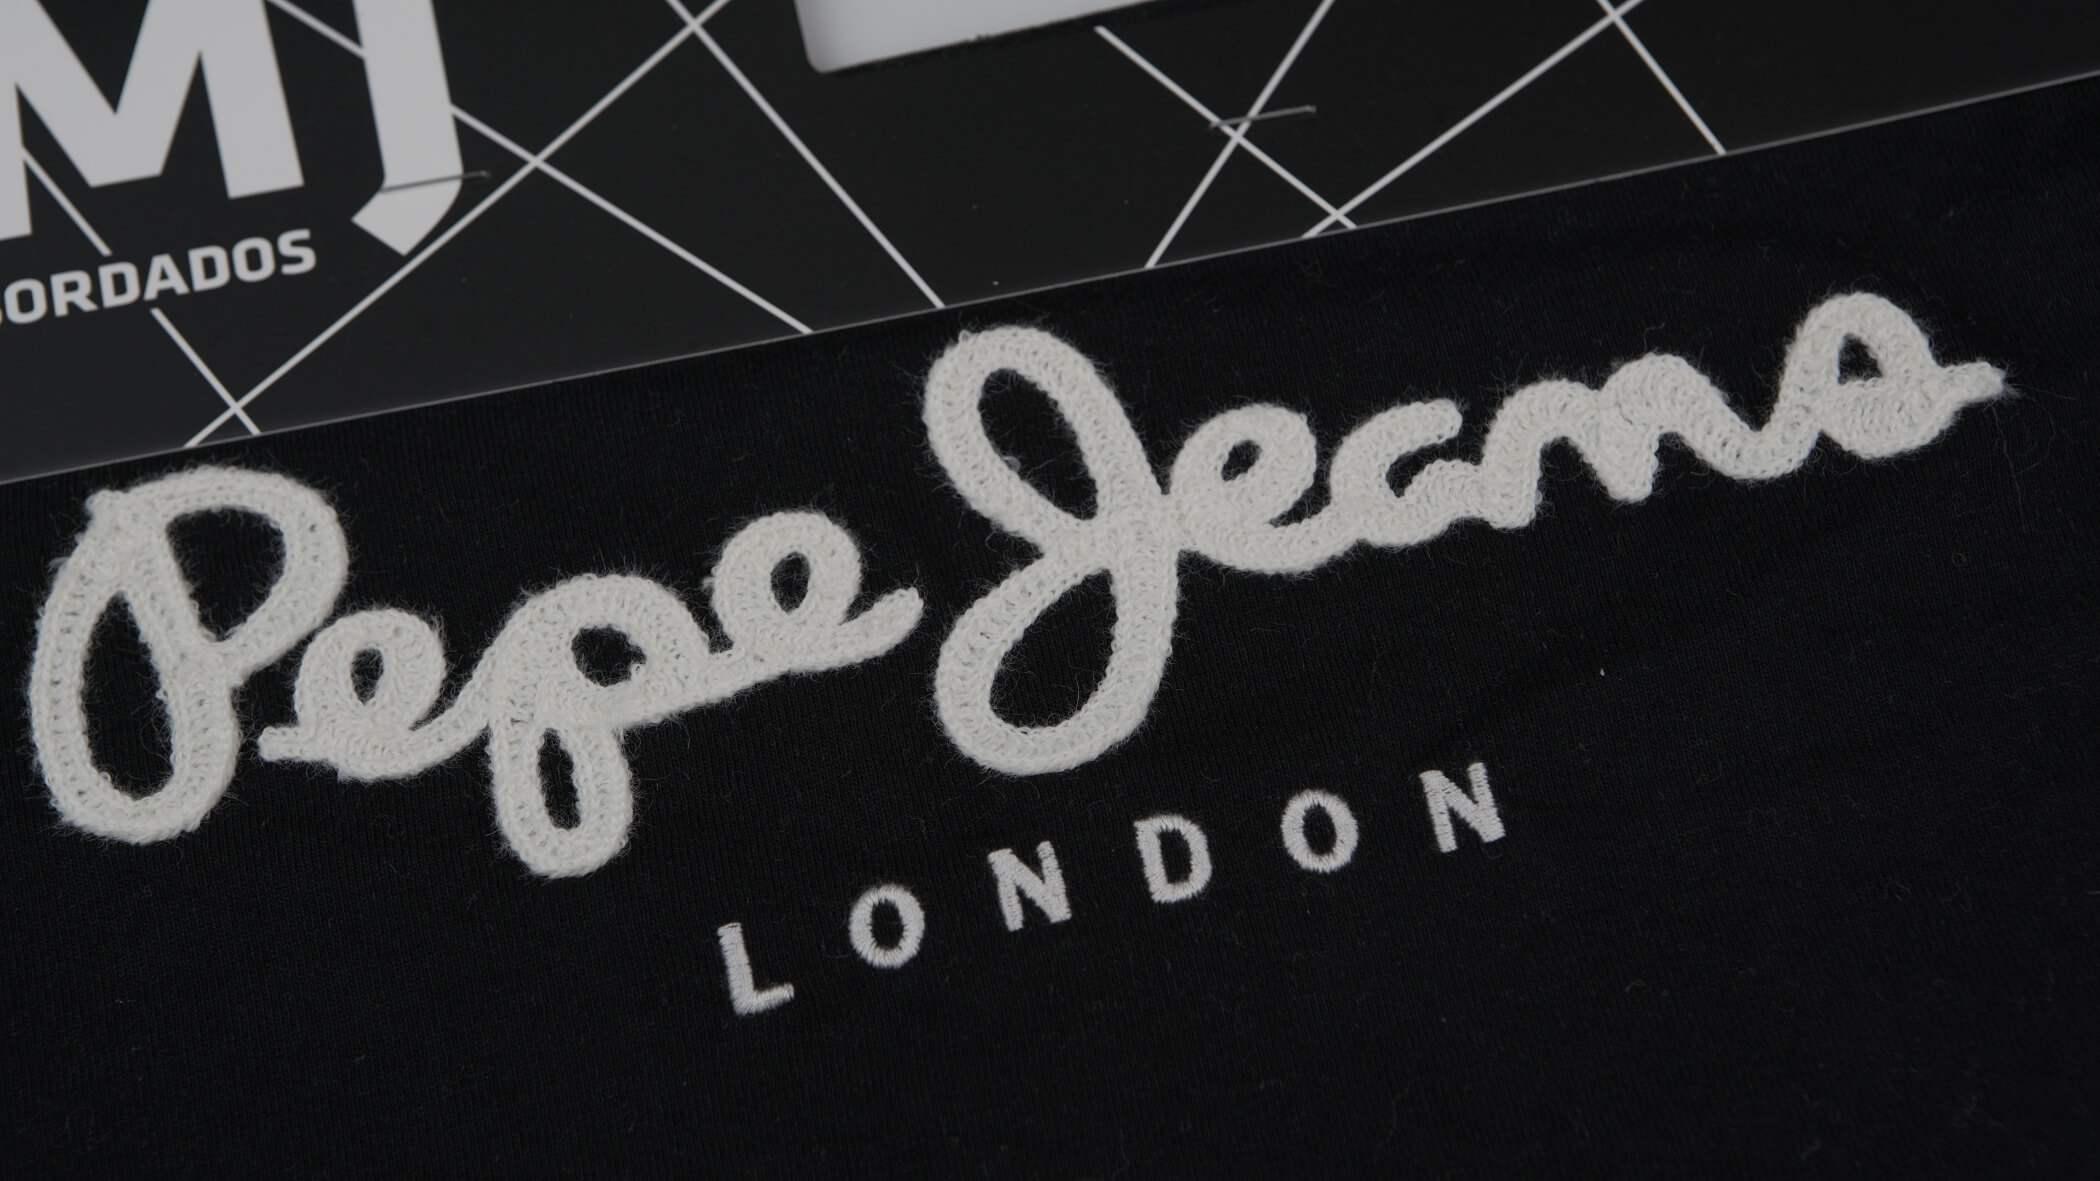 Bordado de ponto cadeia - Cornely cdesenvolvida para a marca Pepe Jeans London